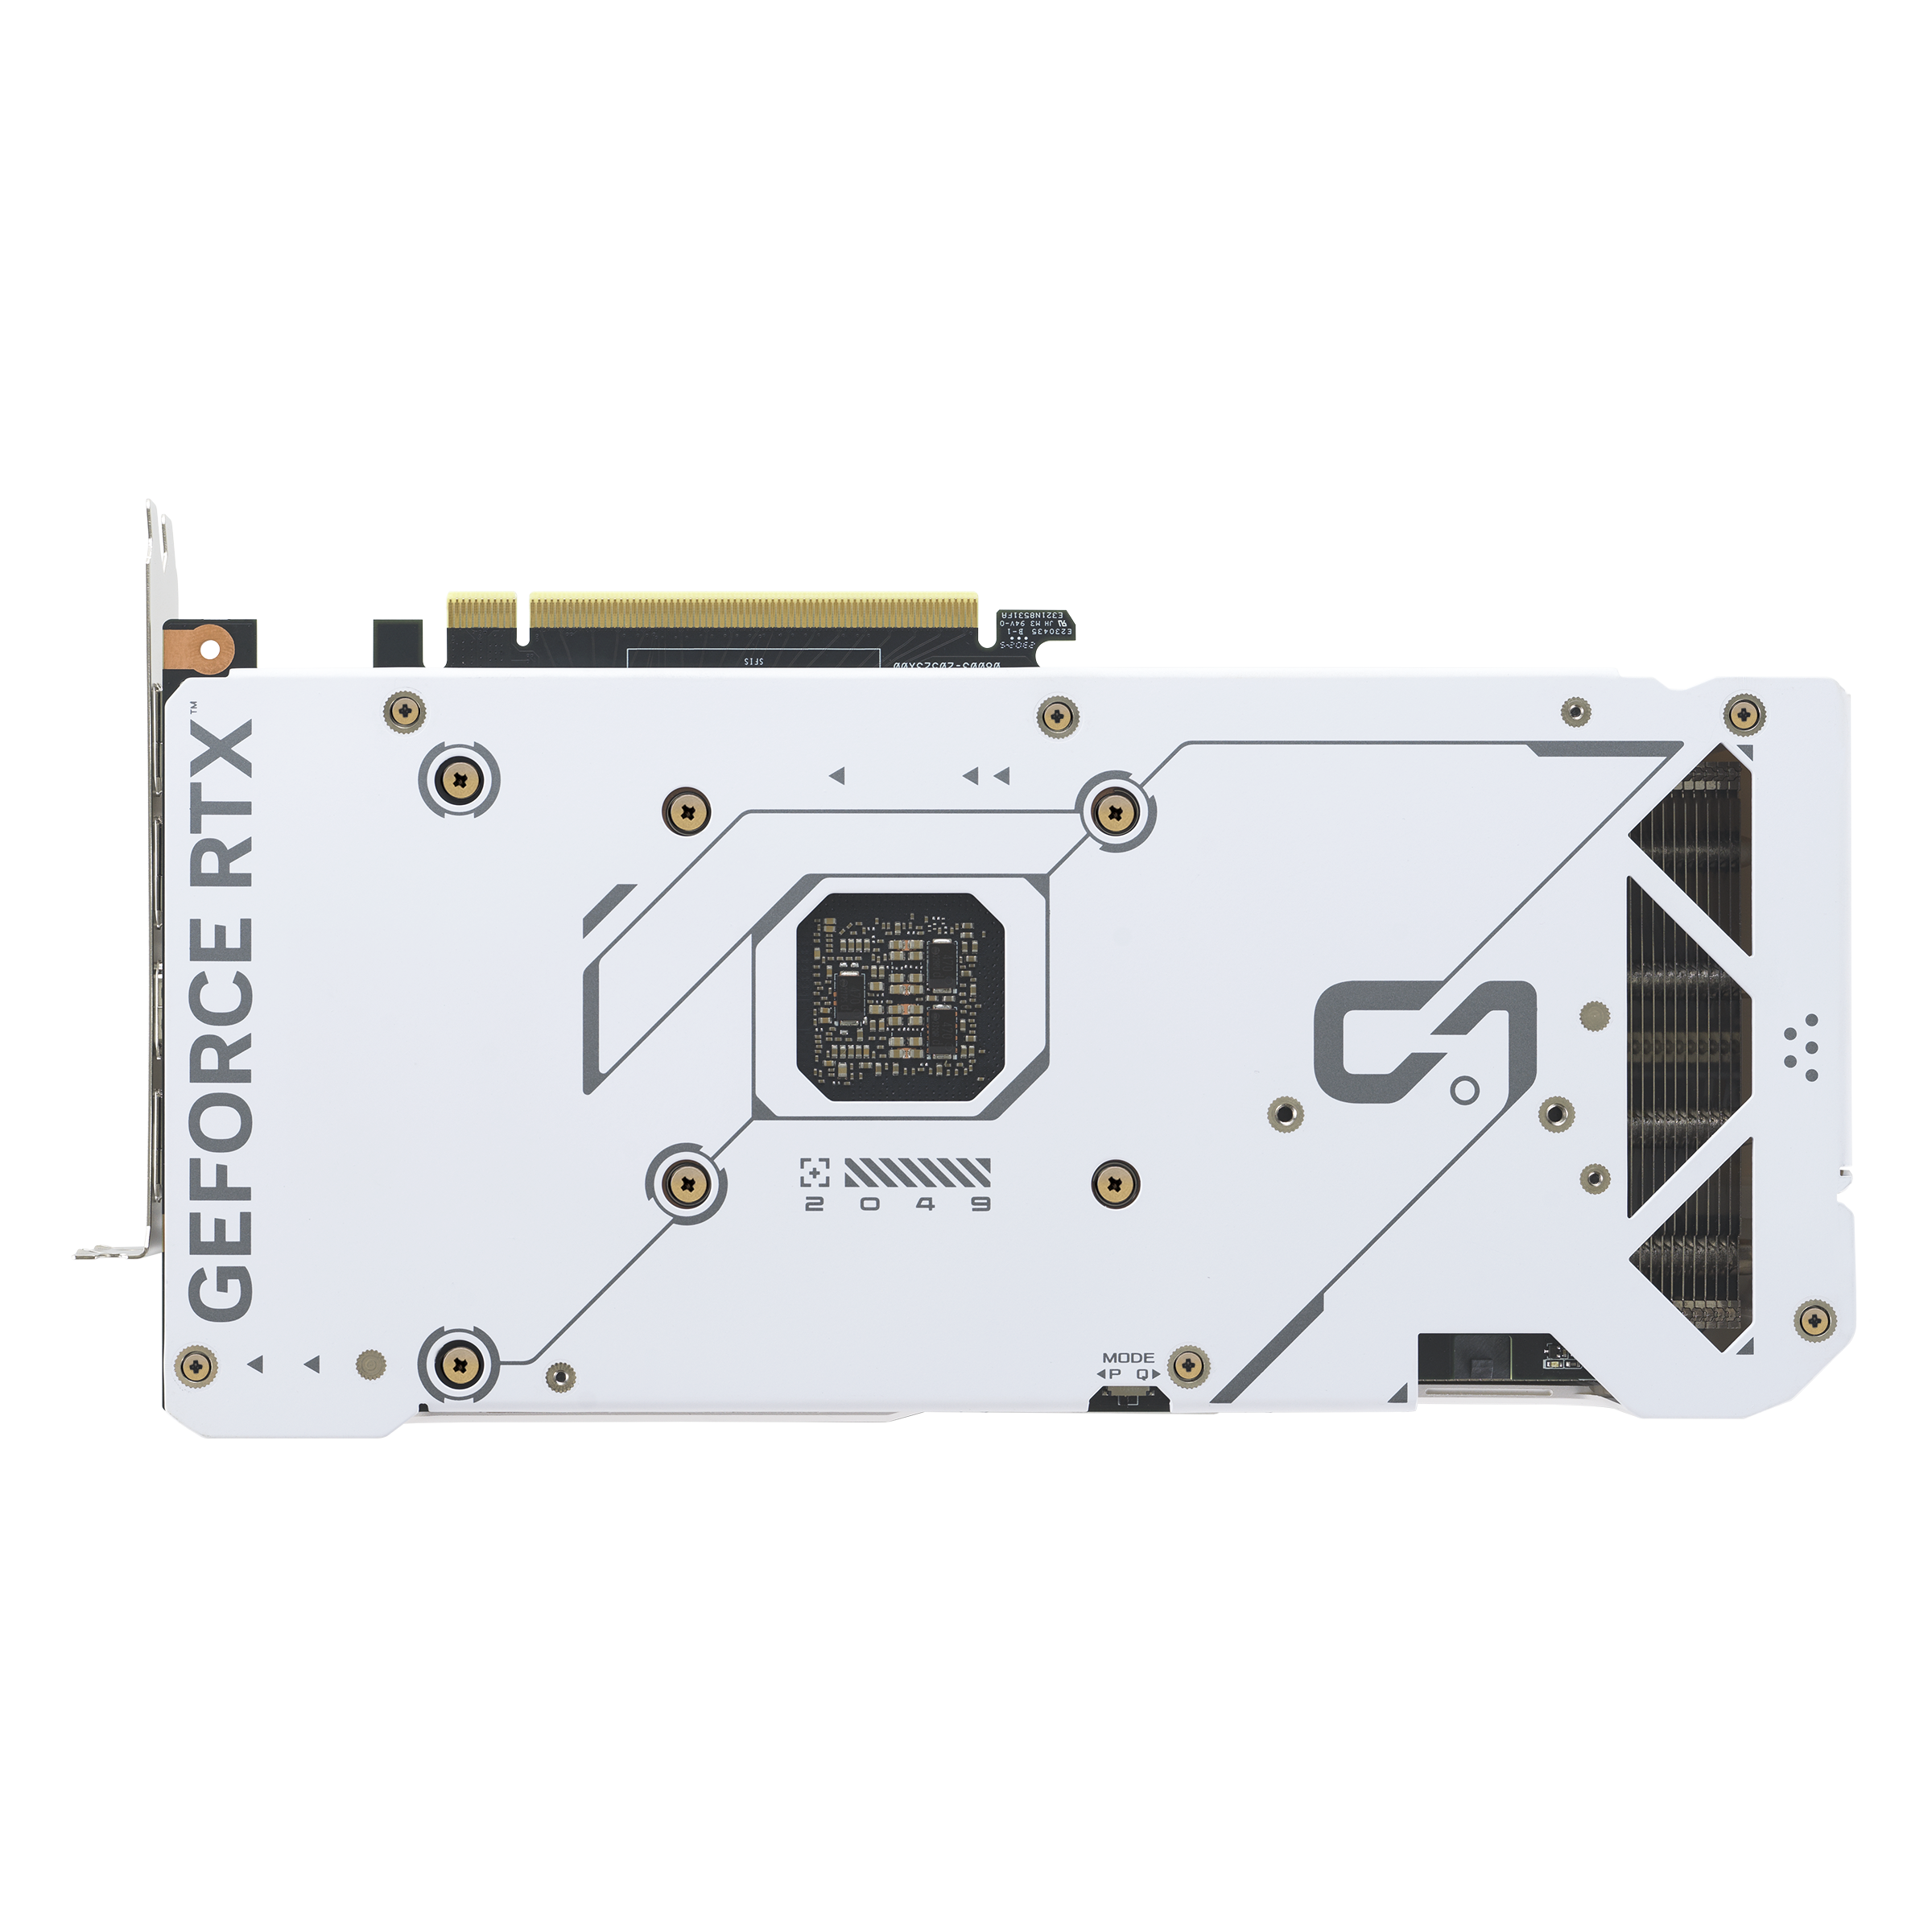 ASUS Dual GeForce RTX™ 4070 White OC Edition 12GB GDDR6X, Graphics Card